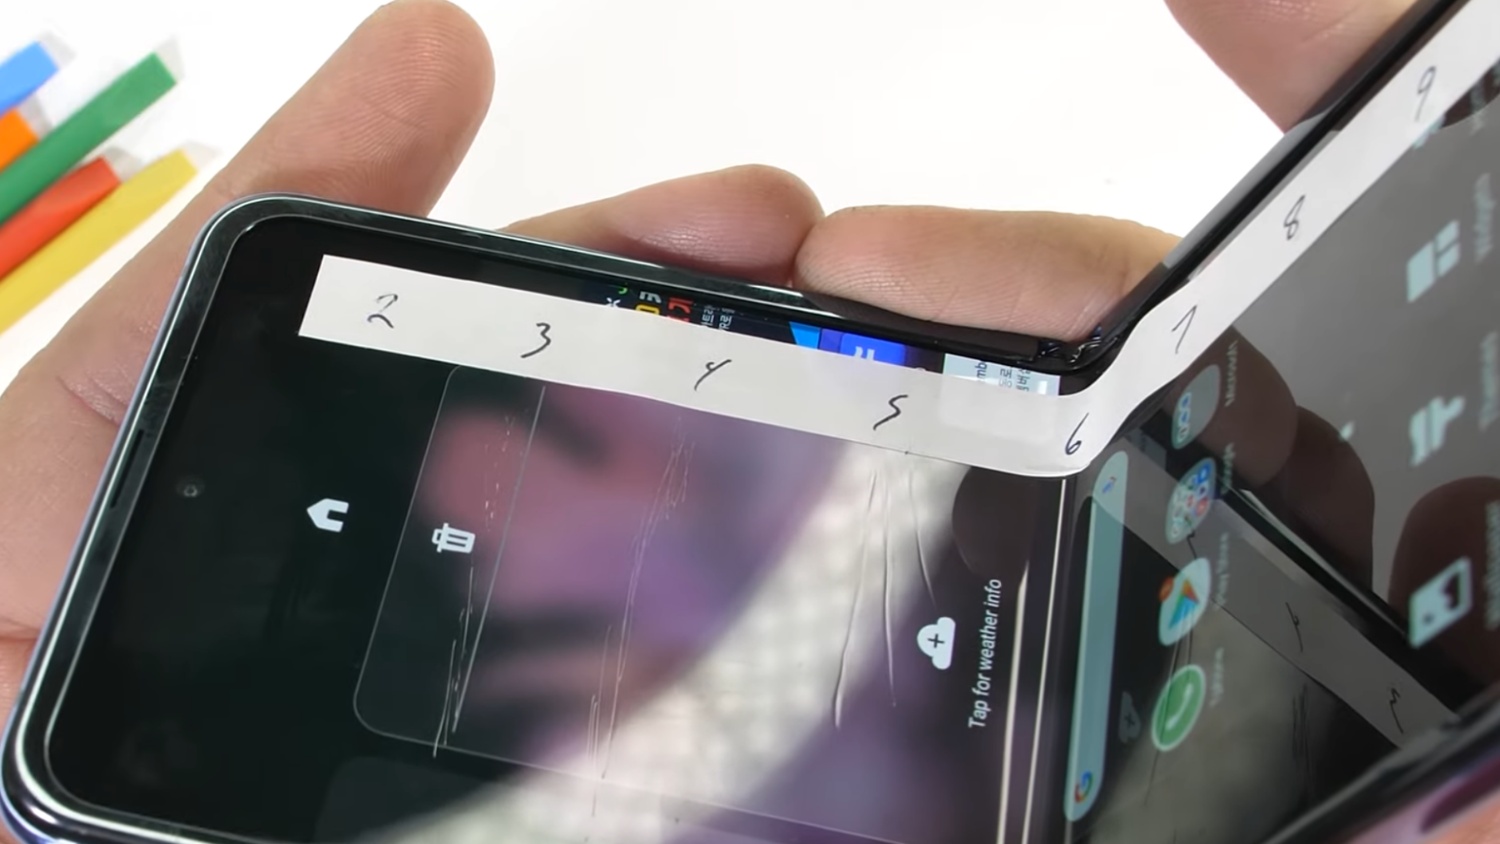 Skrin Samsung Galaxy Z Flip Dilihat Mudah Calar Seumpama Panel Plastik (Dikemaskini)